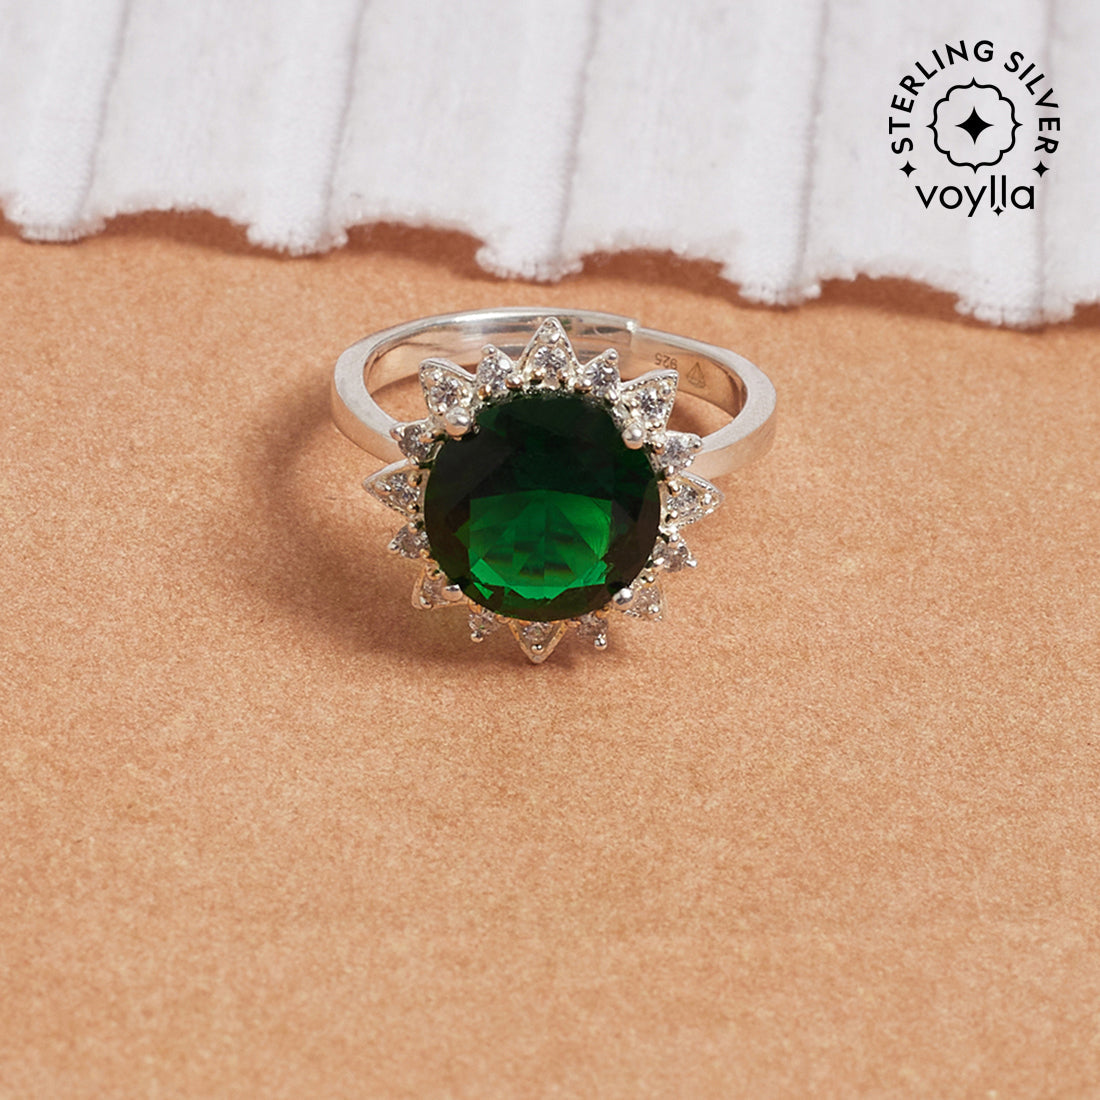 Women's American Diamond Green Stone Cluster 925 Sterling Silver Adjustable Ring - Voylla